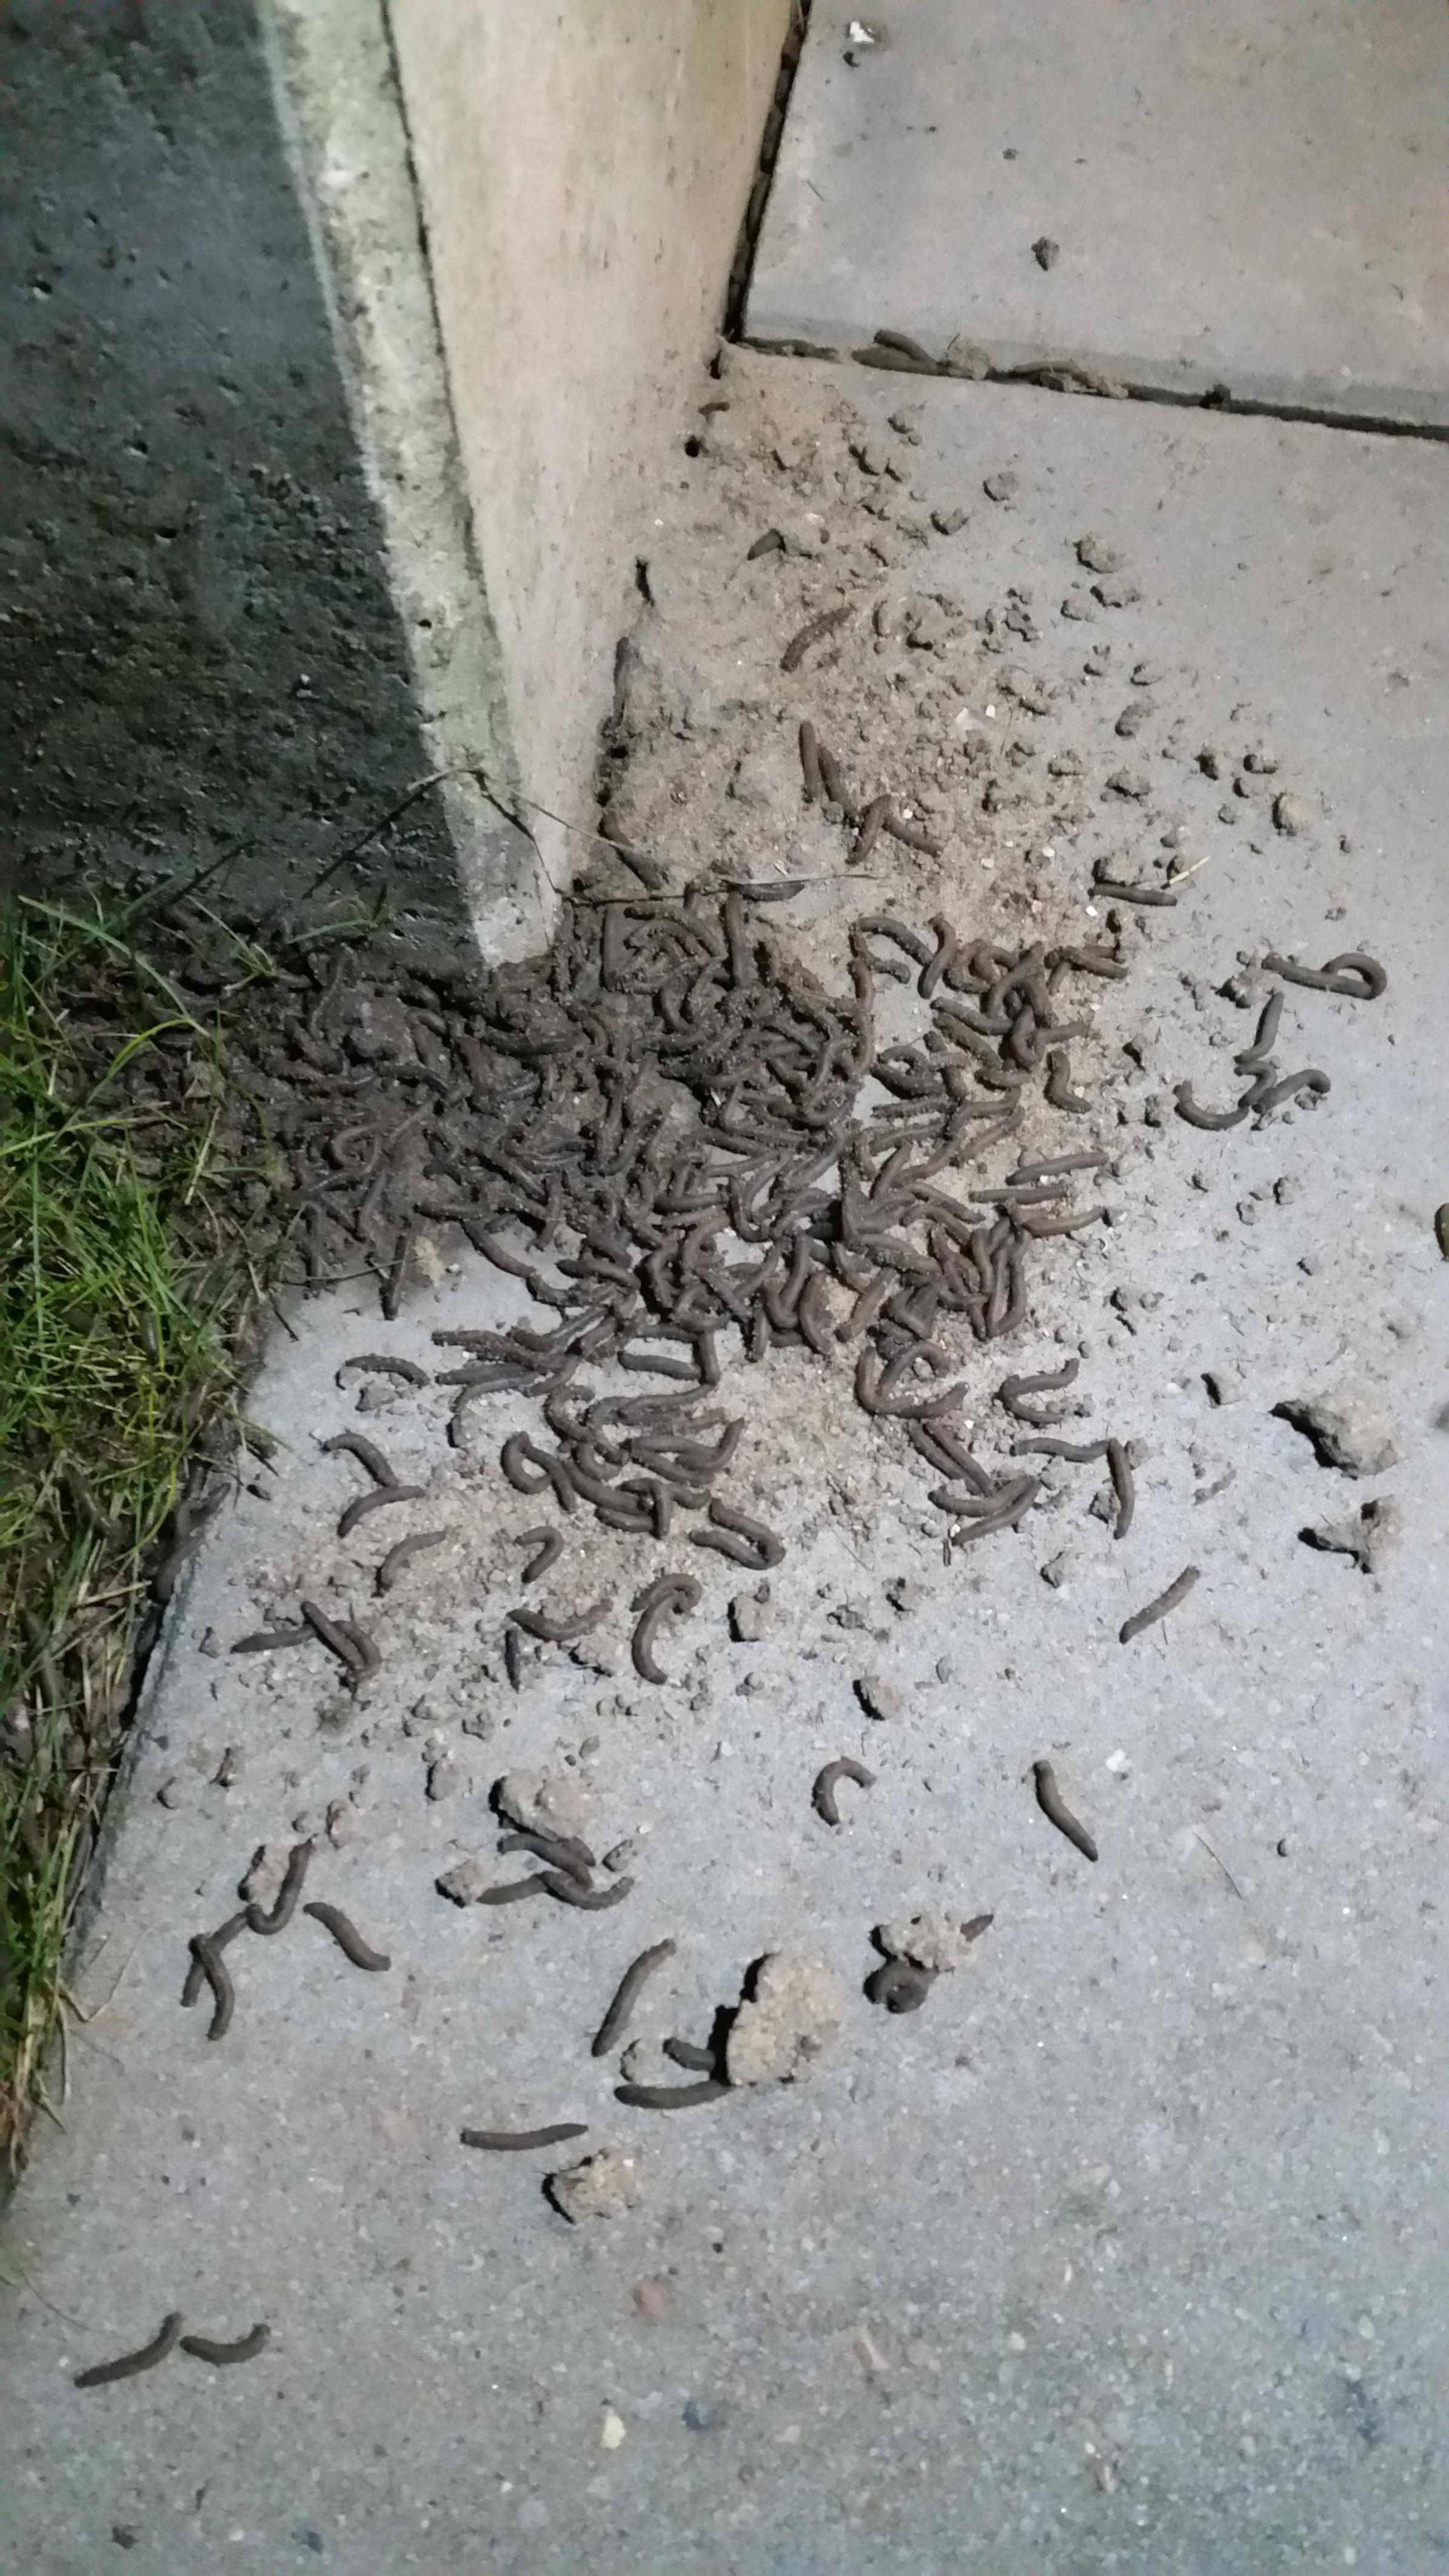 Strange worm cult gathering outside my door.